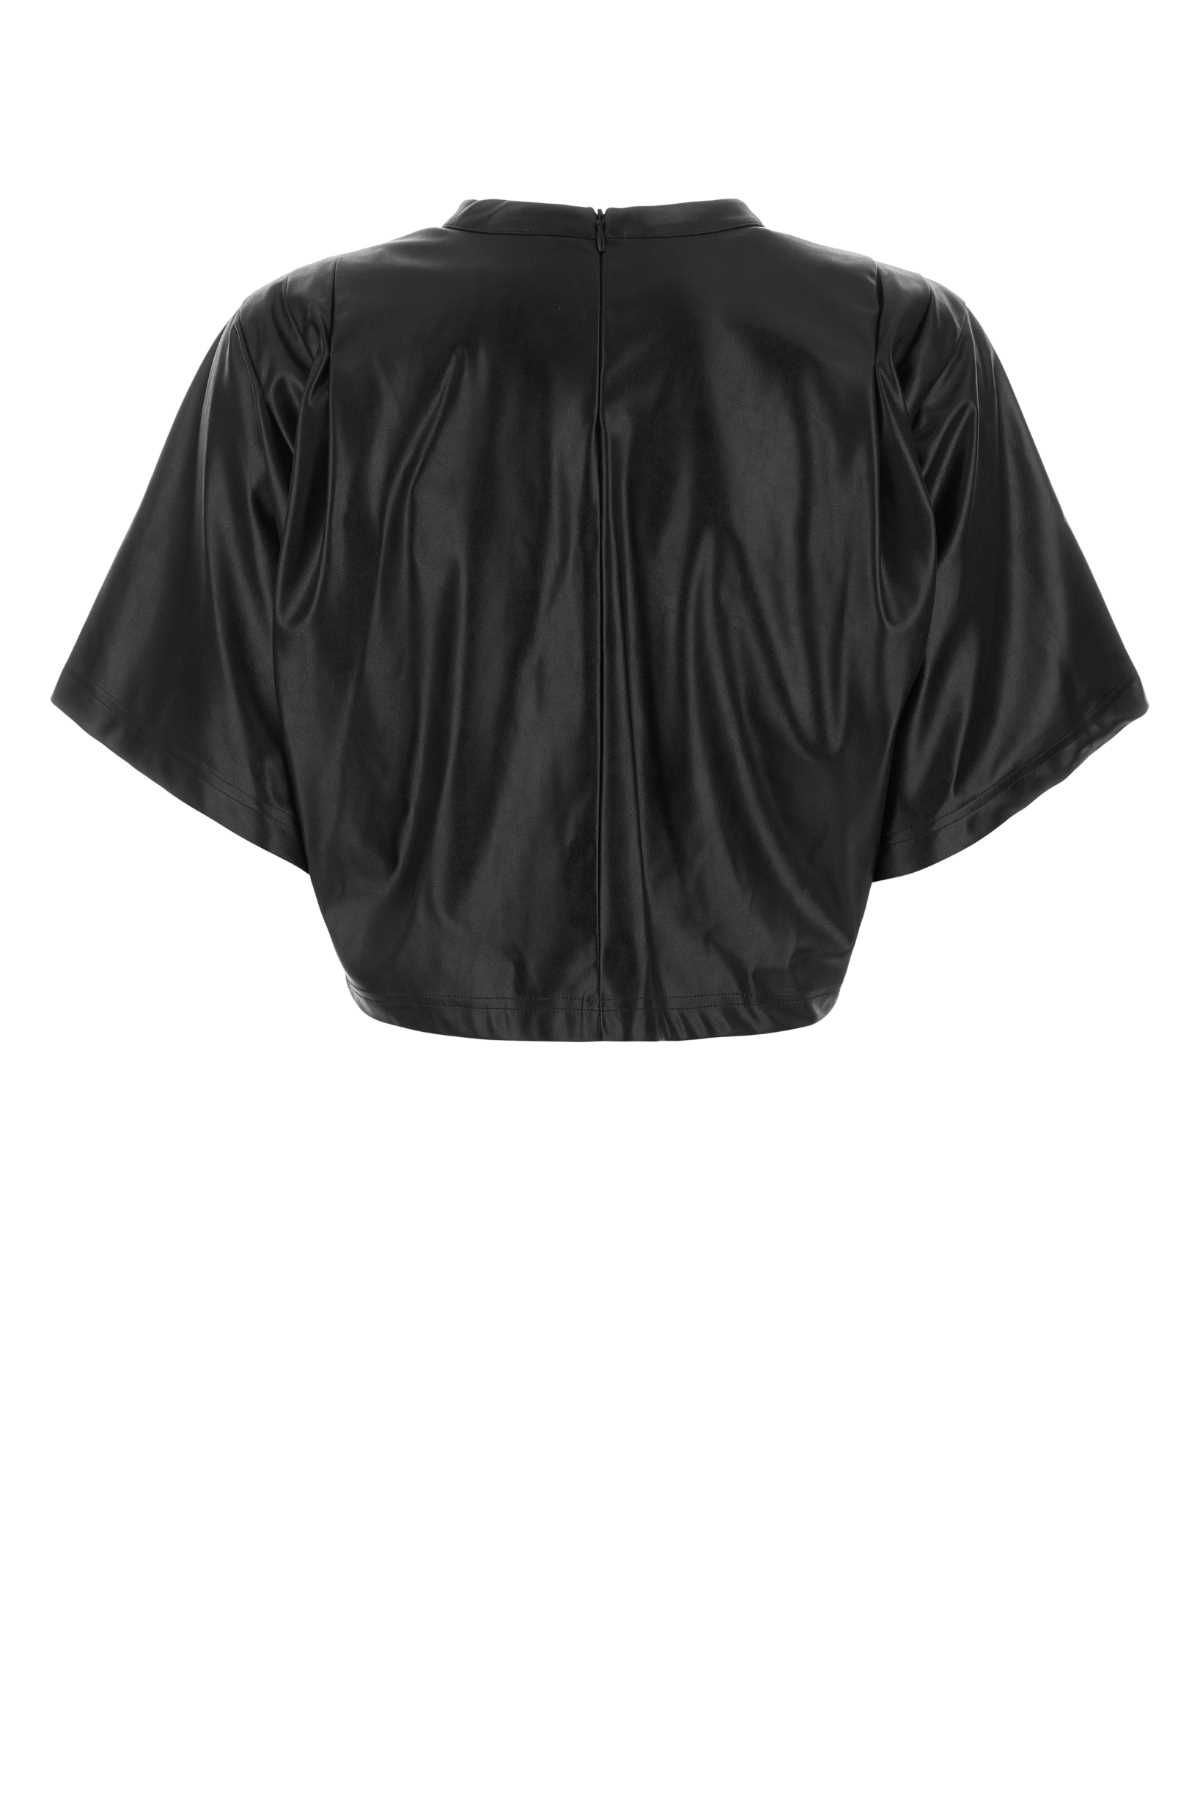 Marant Etoile Black Synthetic Leather Brooky T-shirt